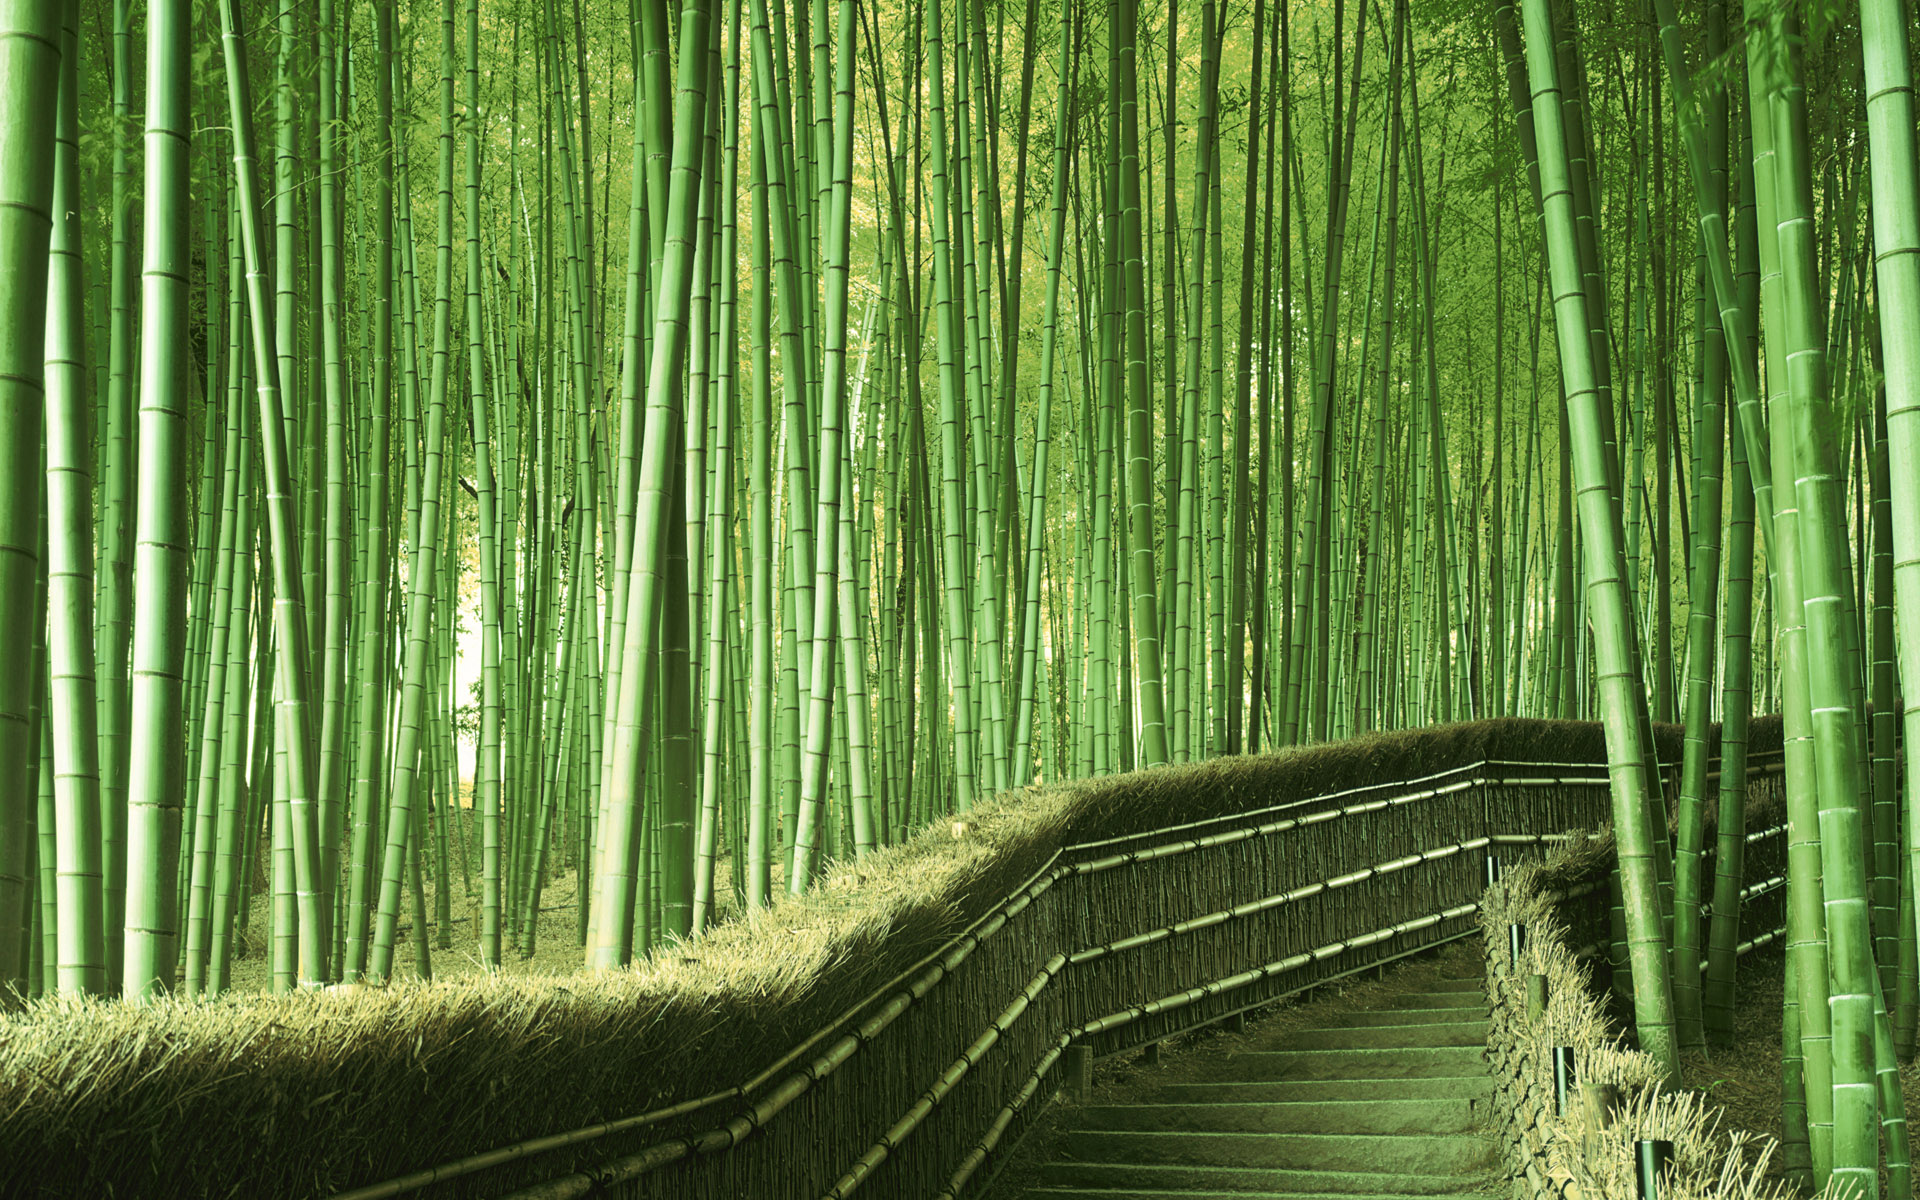 159593 descargar imagen bosque, tierra/naturaleza, bambú: fondos de pantalla y protectores de pantalla gratis